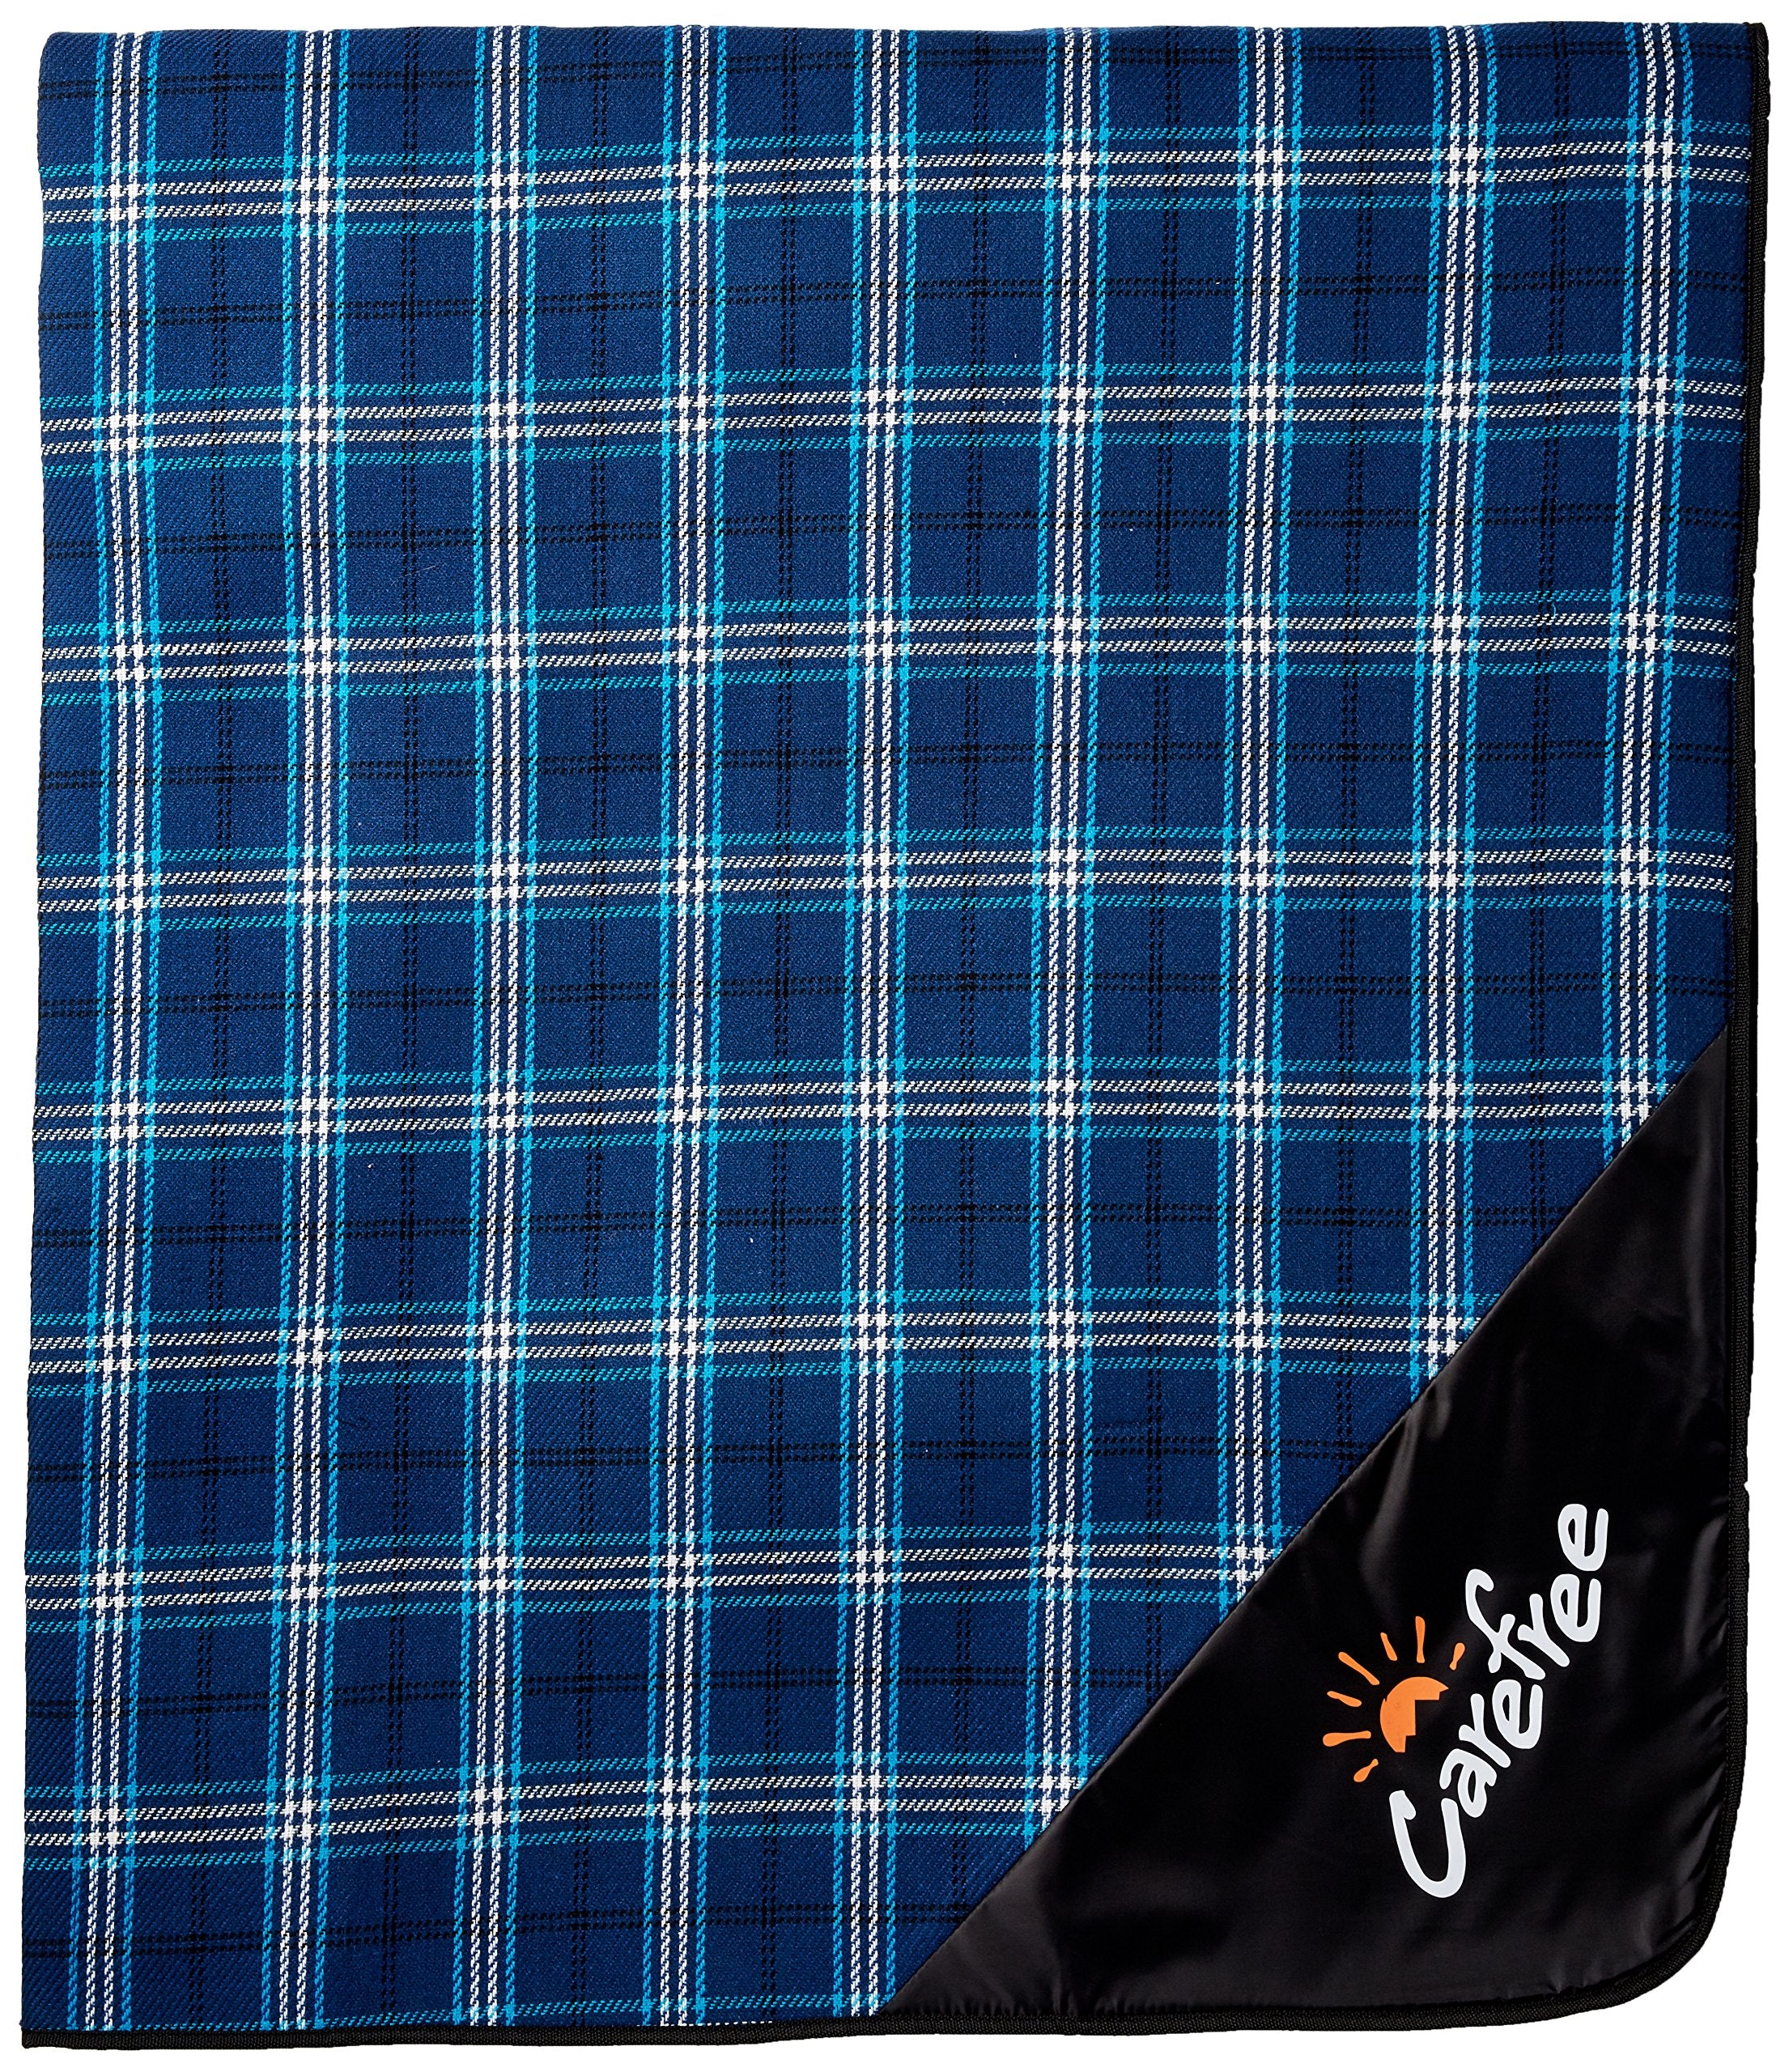 Carefree 907002 6.5' x 5.5' Ground Blanket